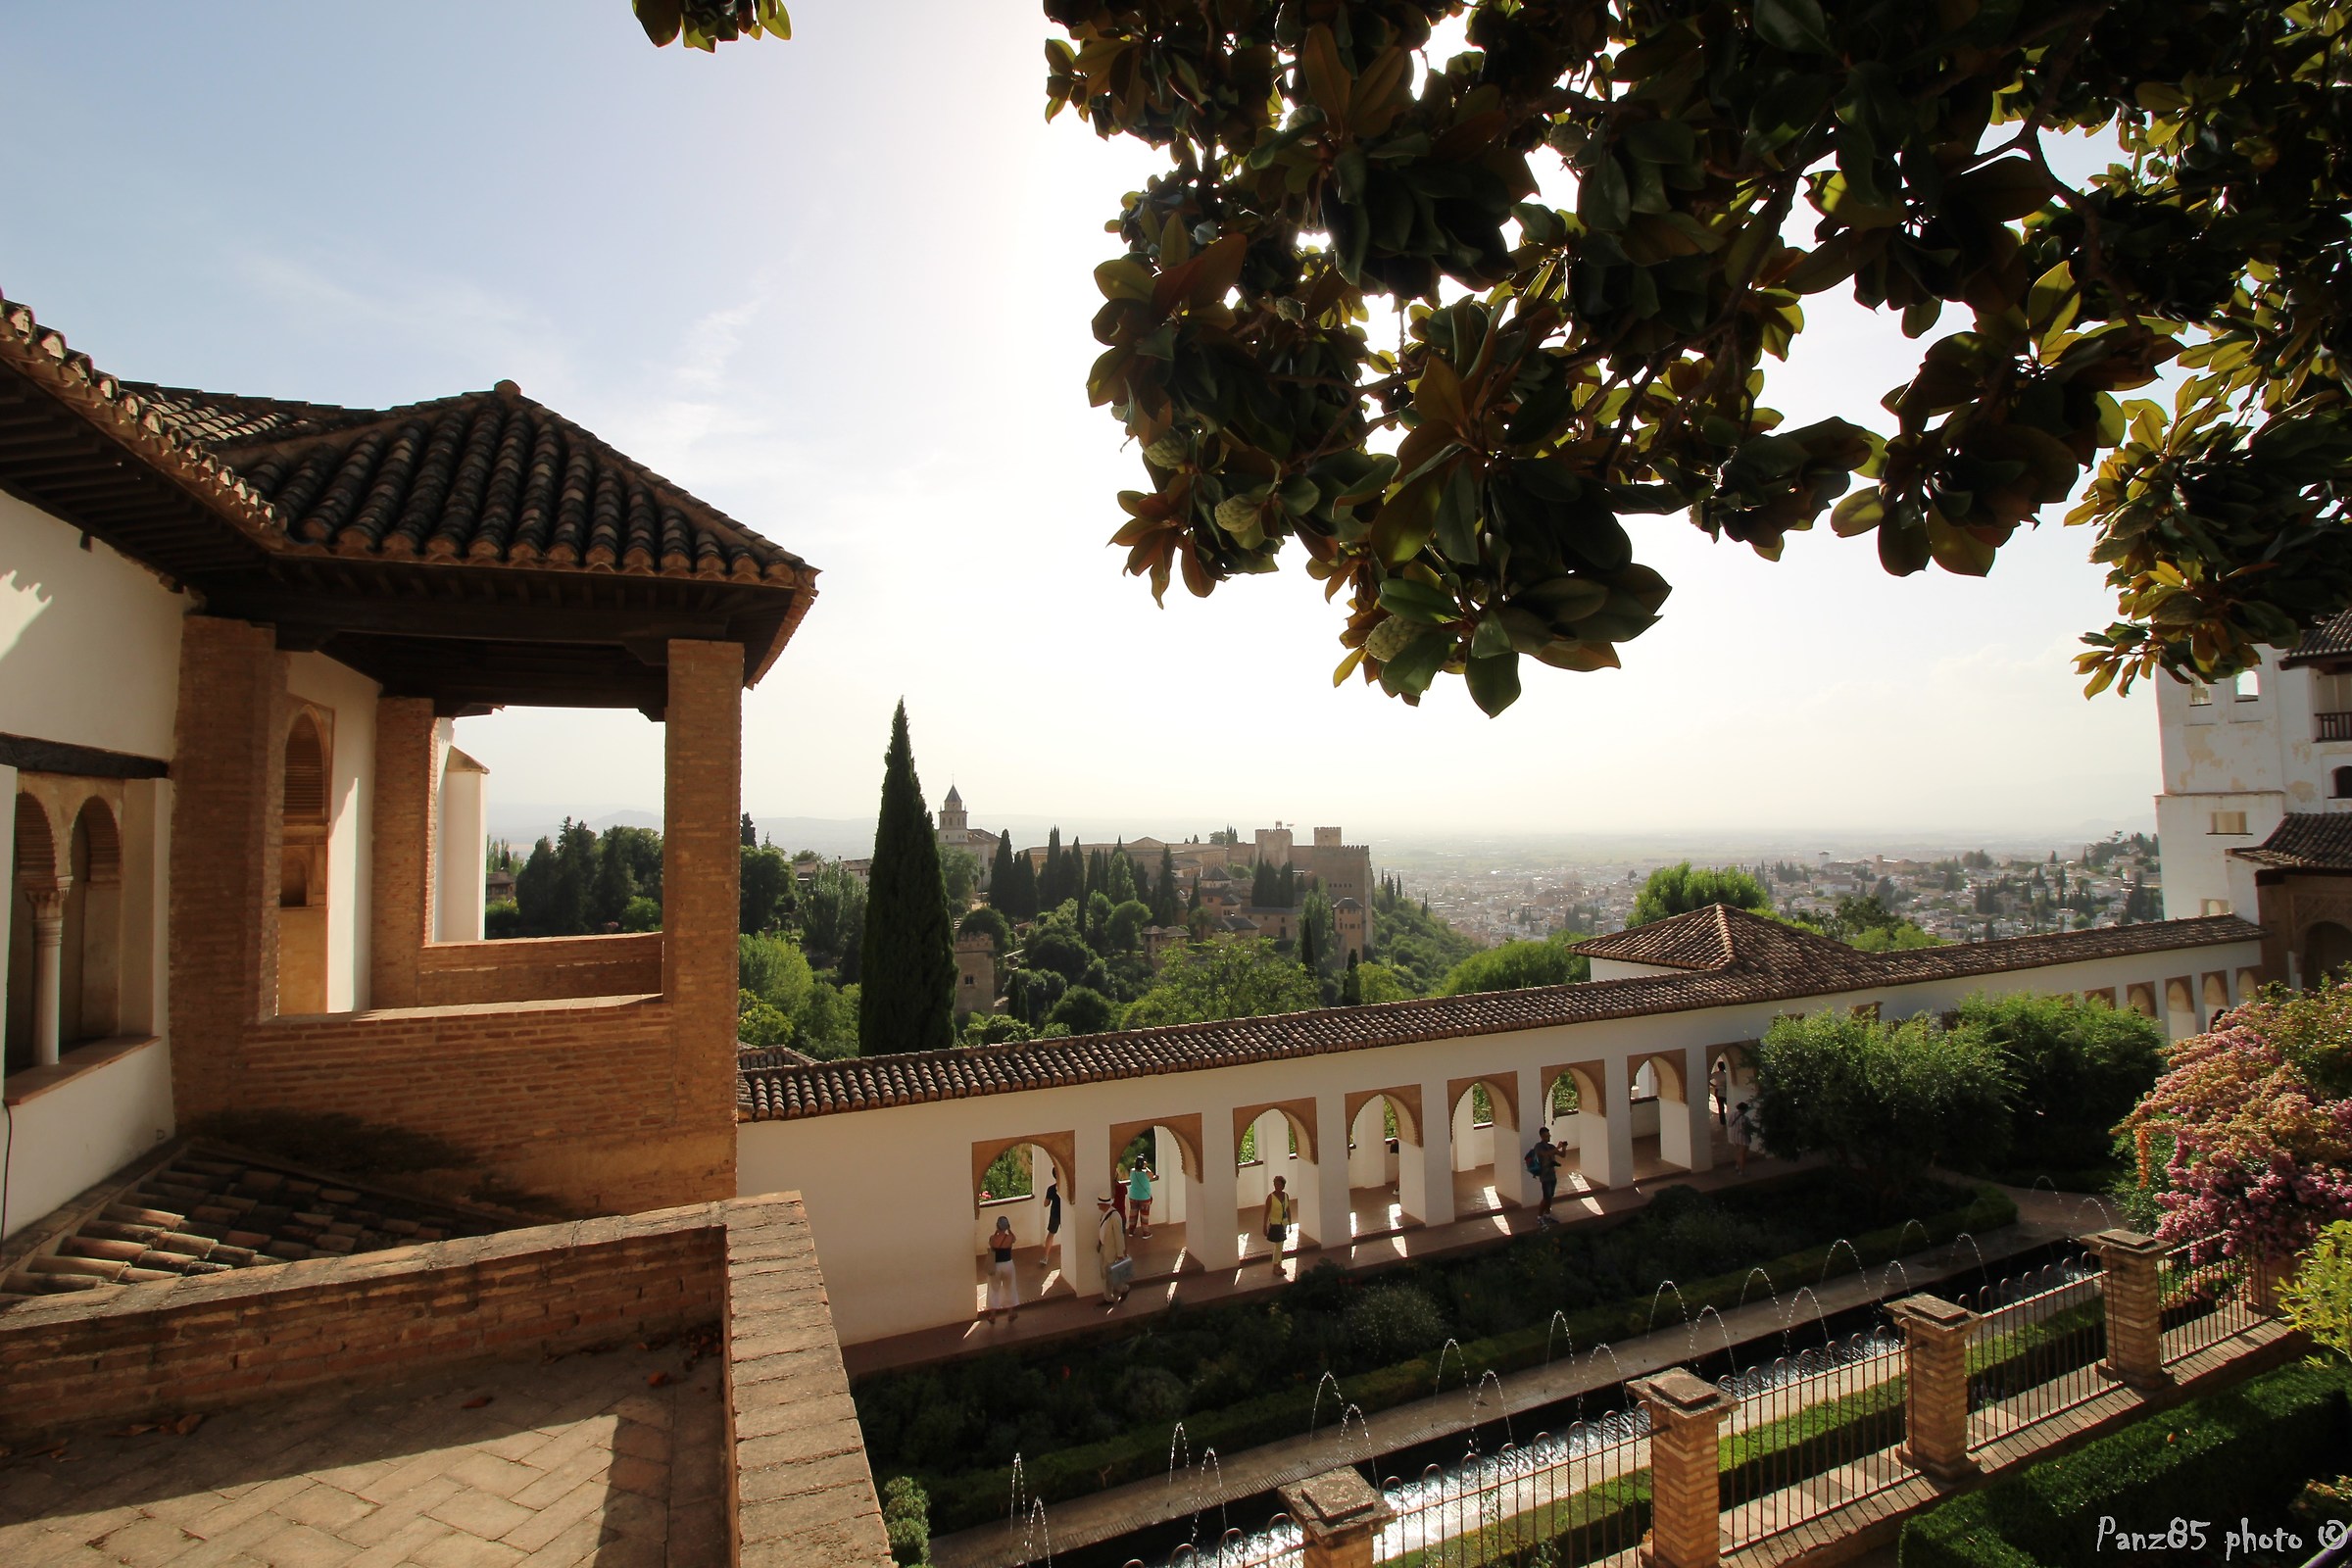 Generalife panorama sulla parte ovest dell'Alhambra...